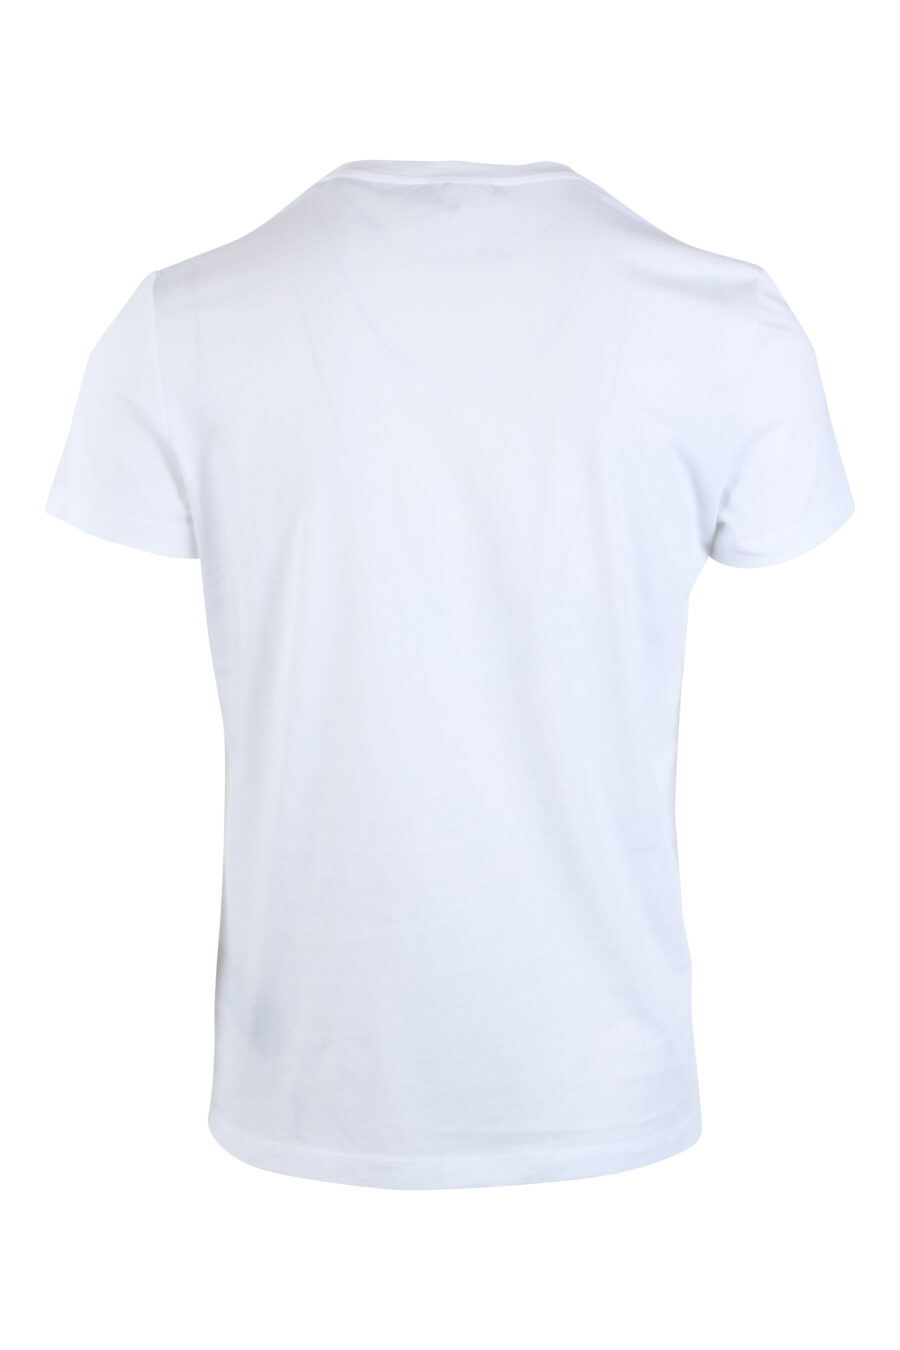 Camiseta blanca de algodón eco con maxilogo dorado "paris" - IMG 2613